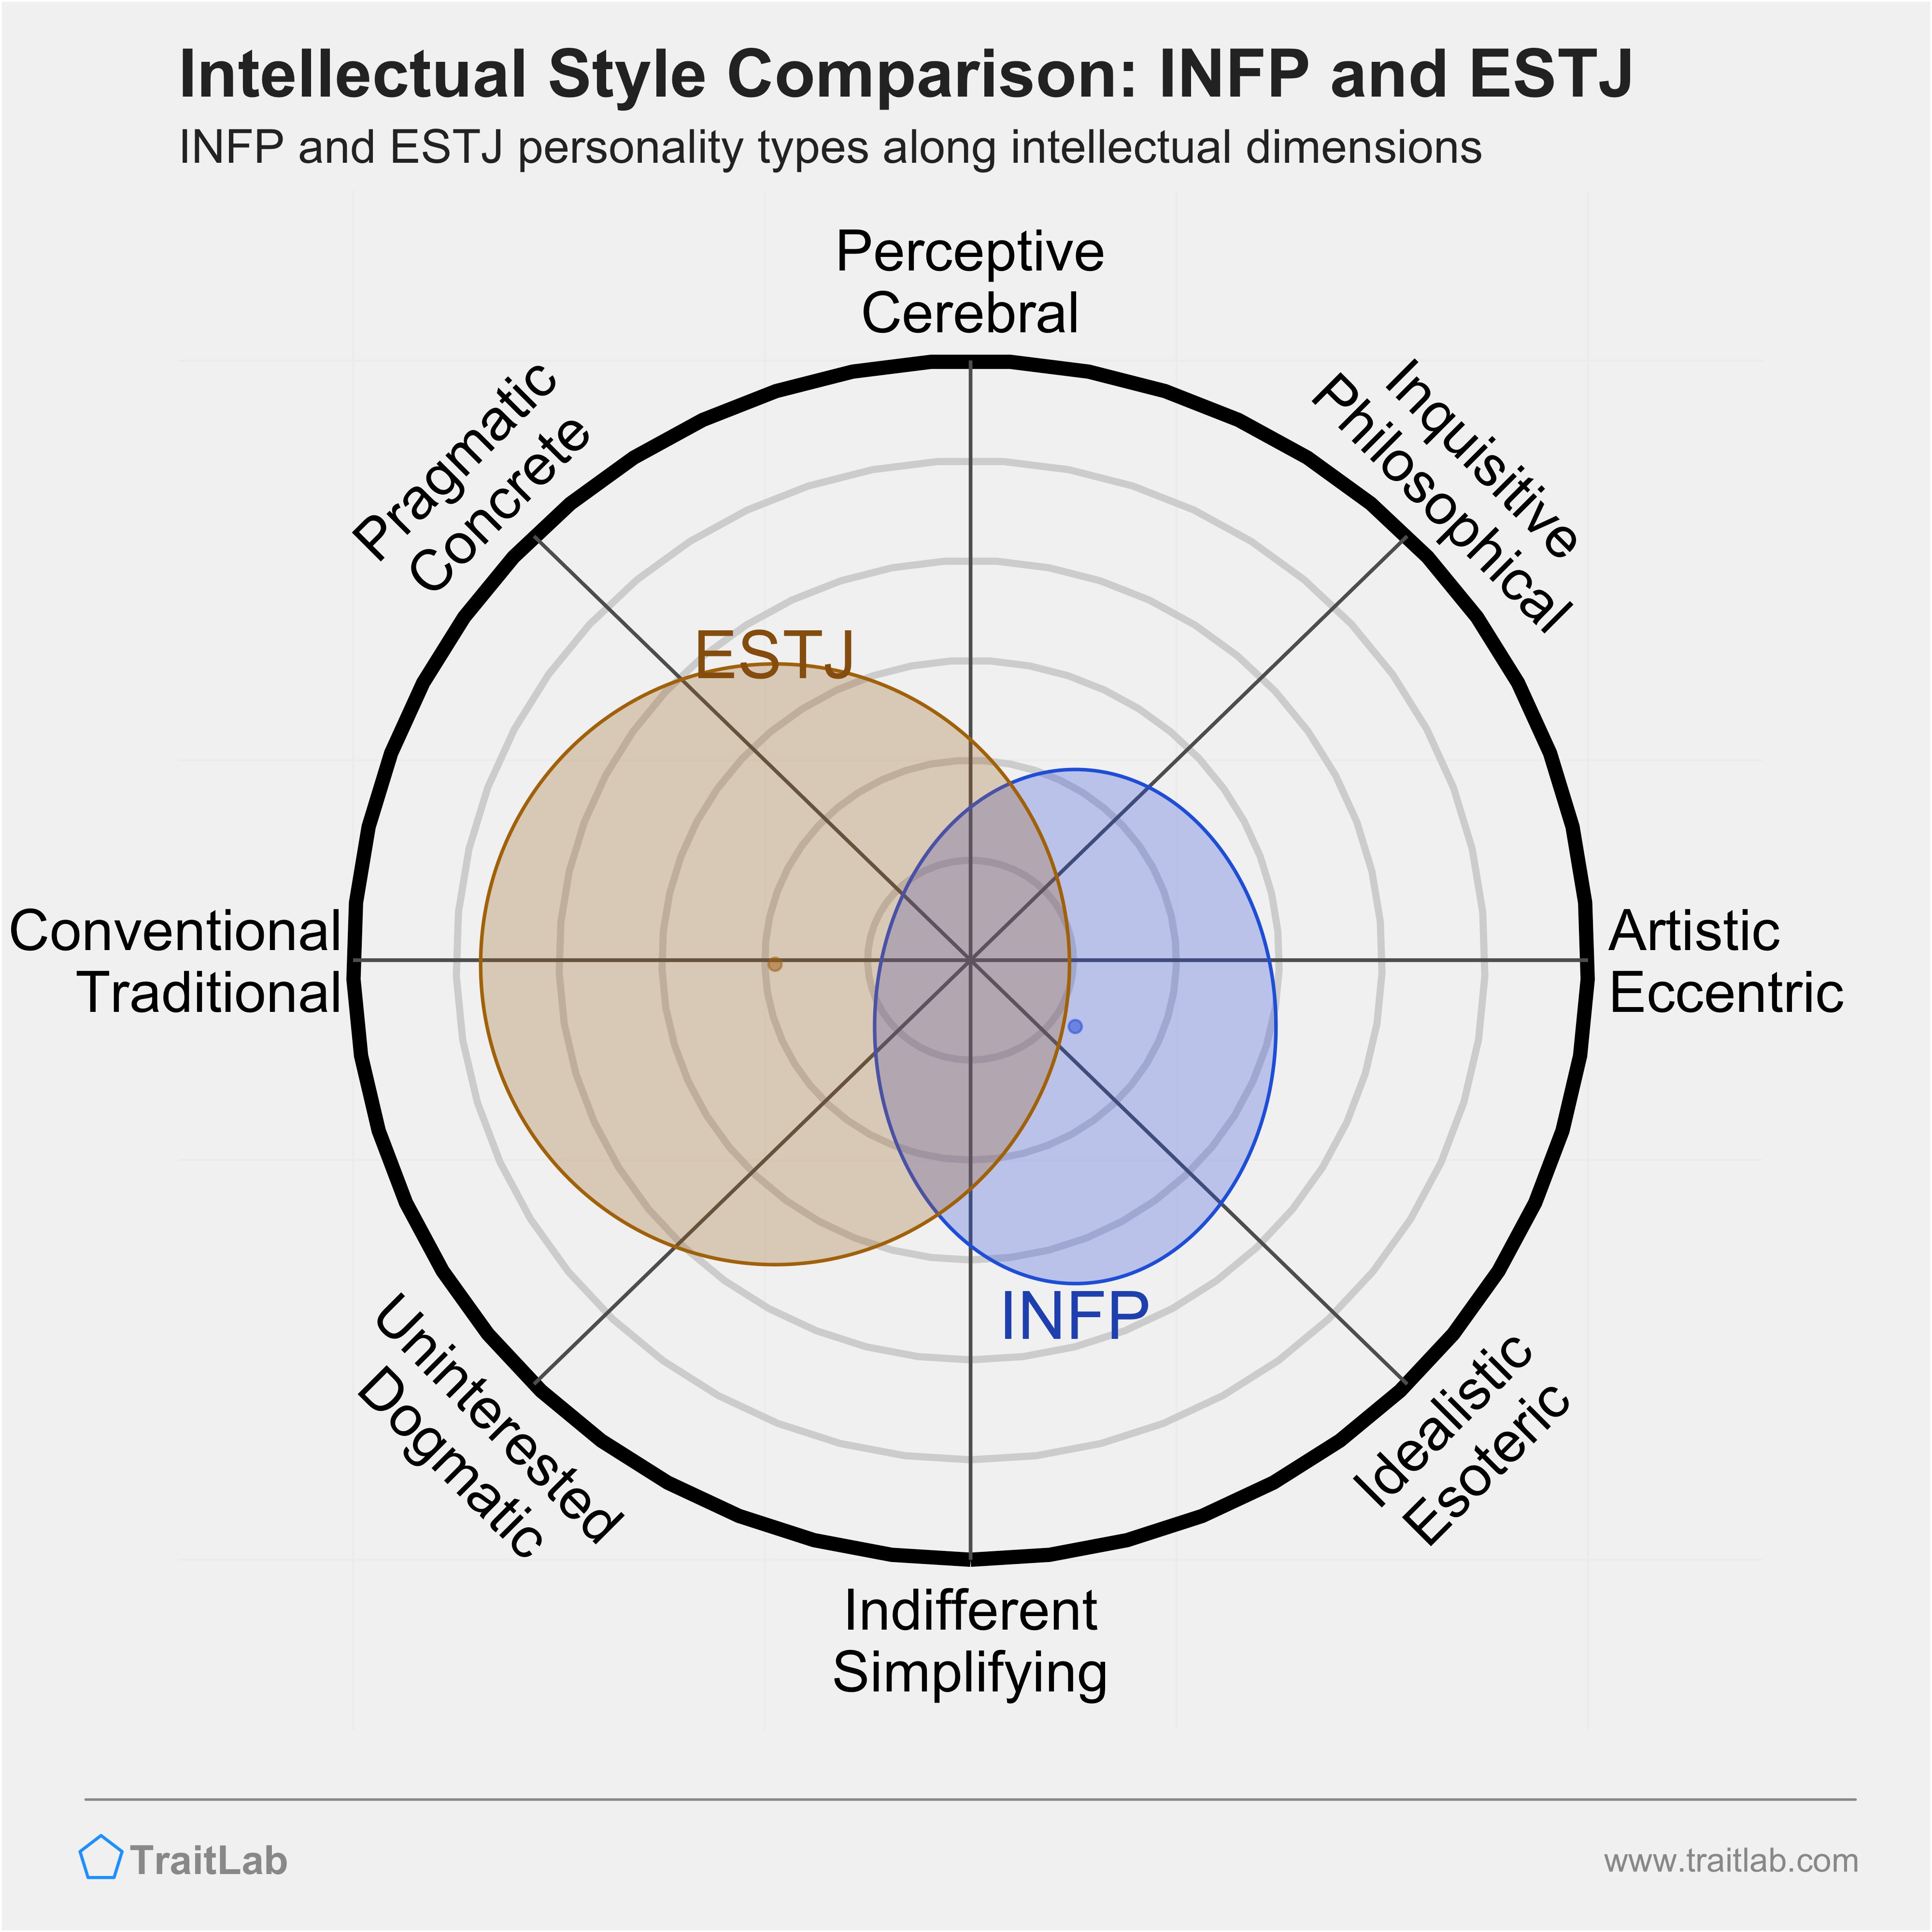 INFP and ESTJ comparison across intellectual dimensions